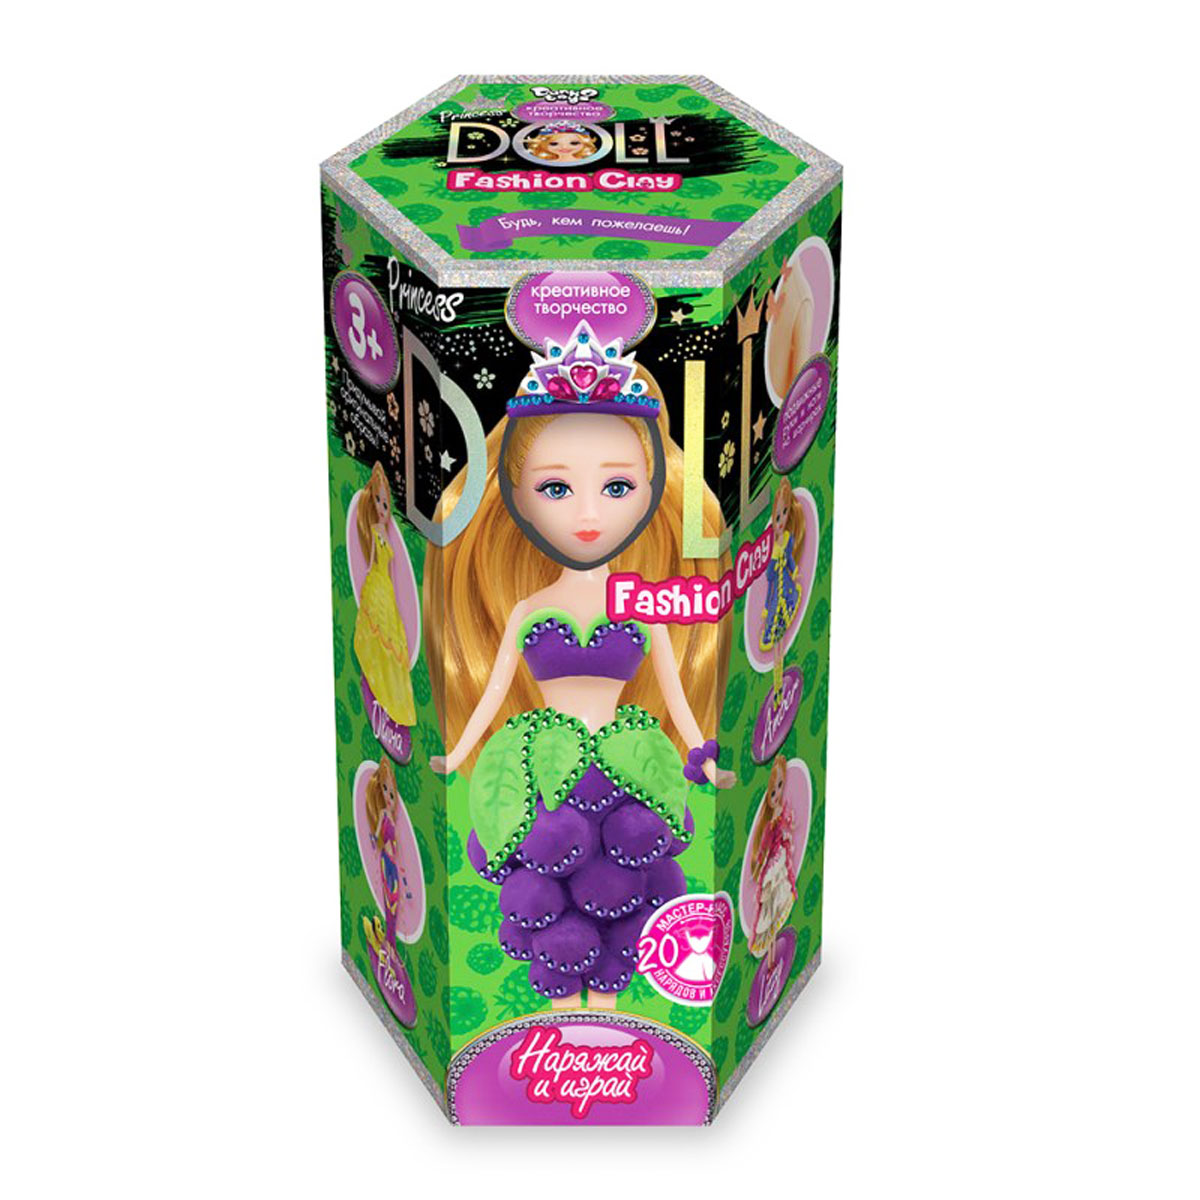 Набор творчества 'Princess doll' пластилин русский язык